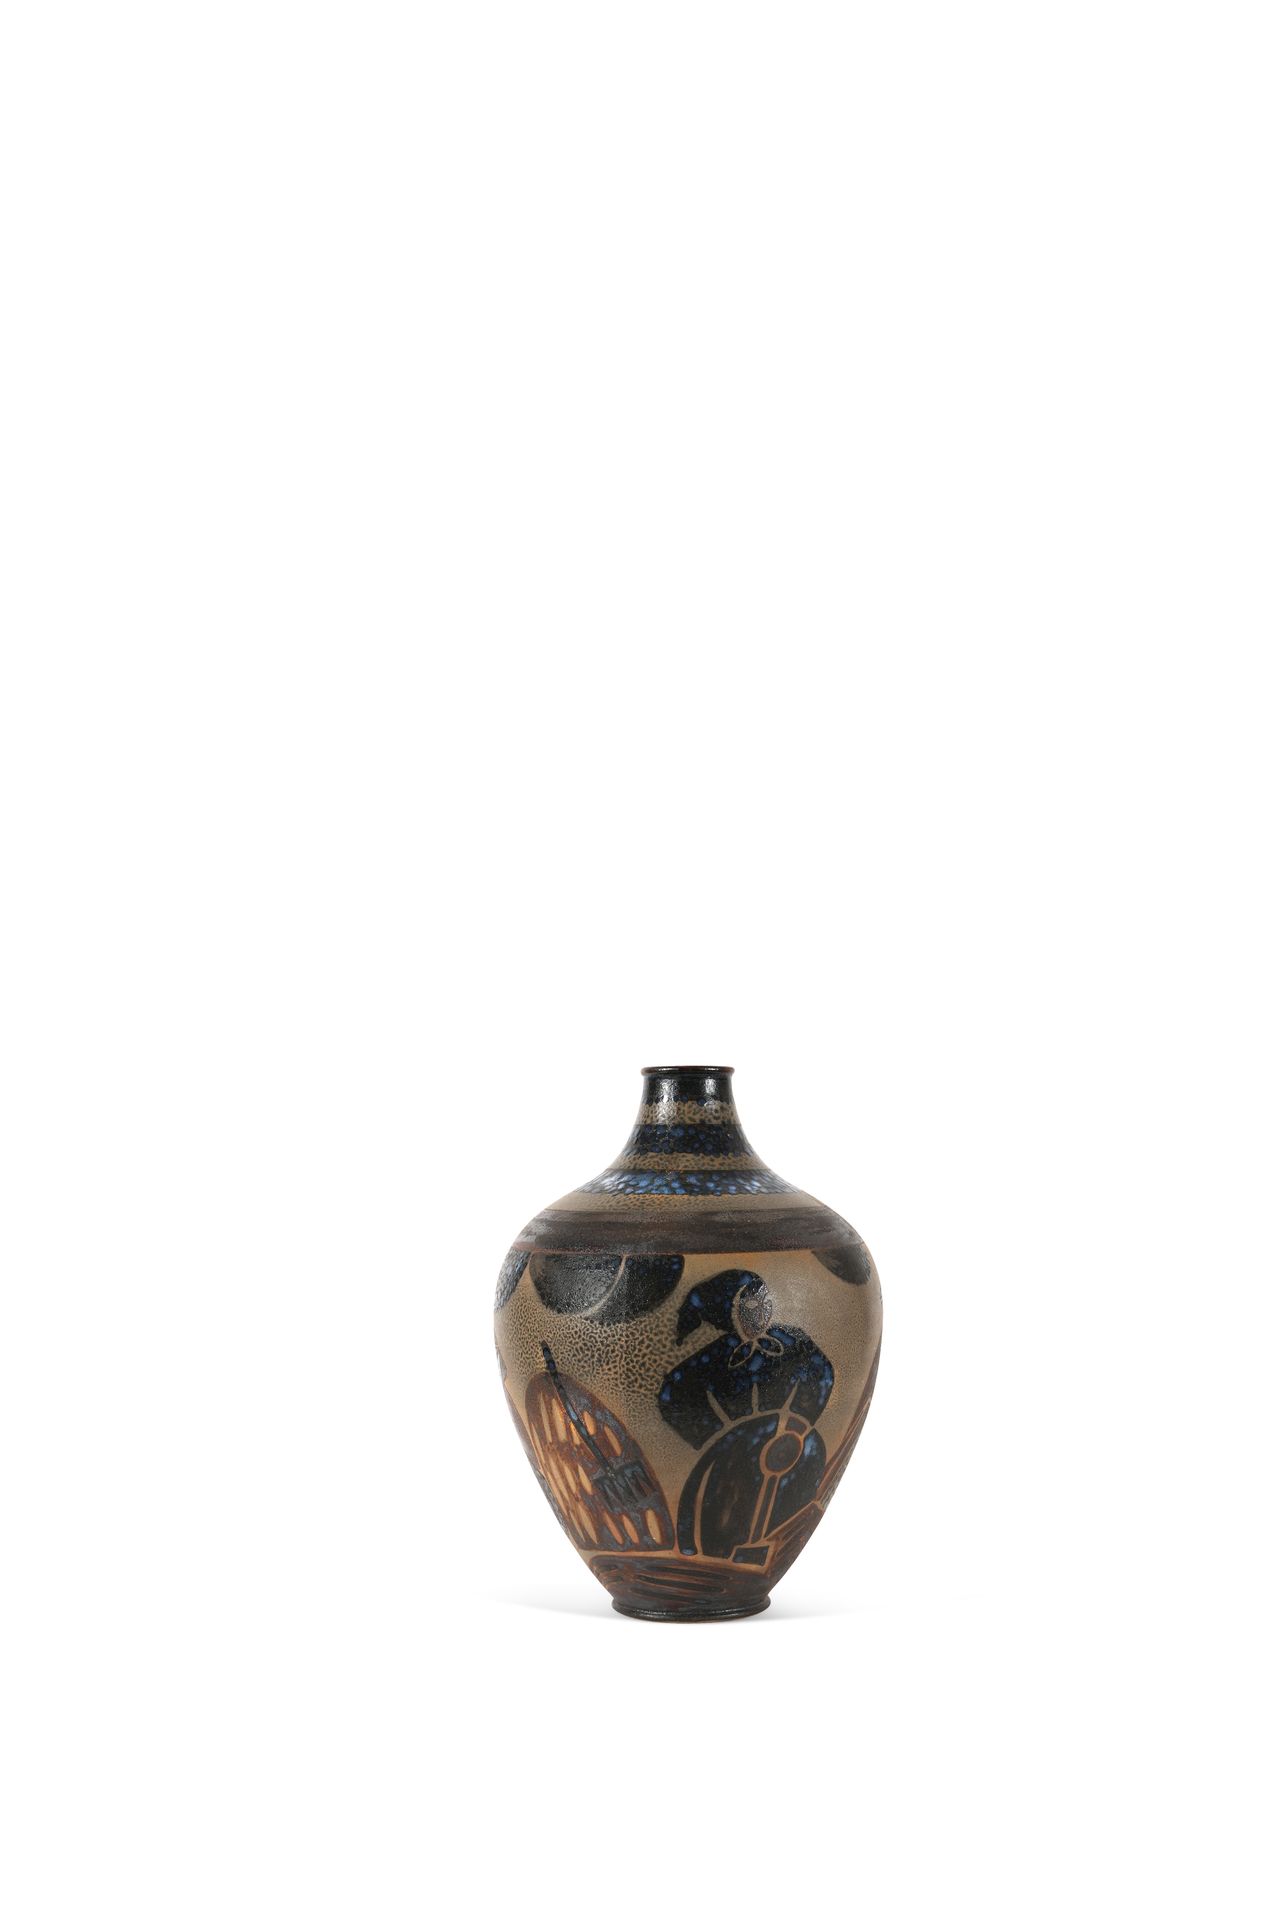 Null Claude LEVY (1895-1942) 陶瓷花瓶 底部有签名和标记 高41厘米 Primavera, 约1935年